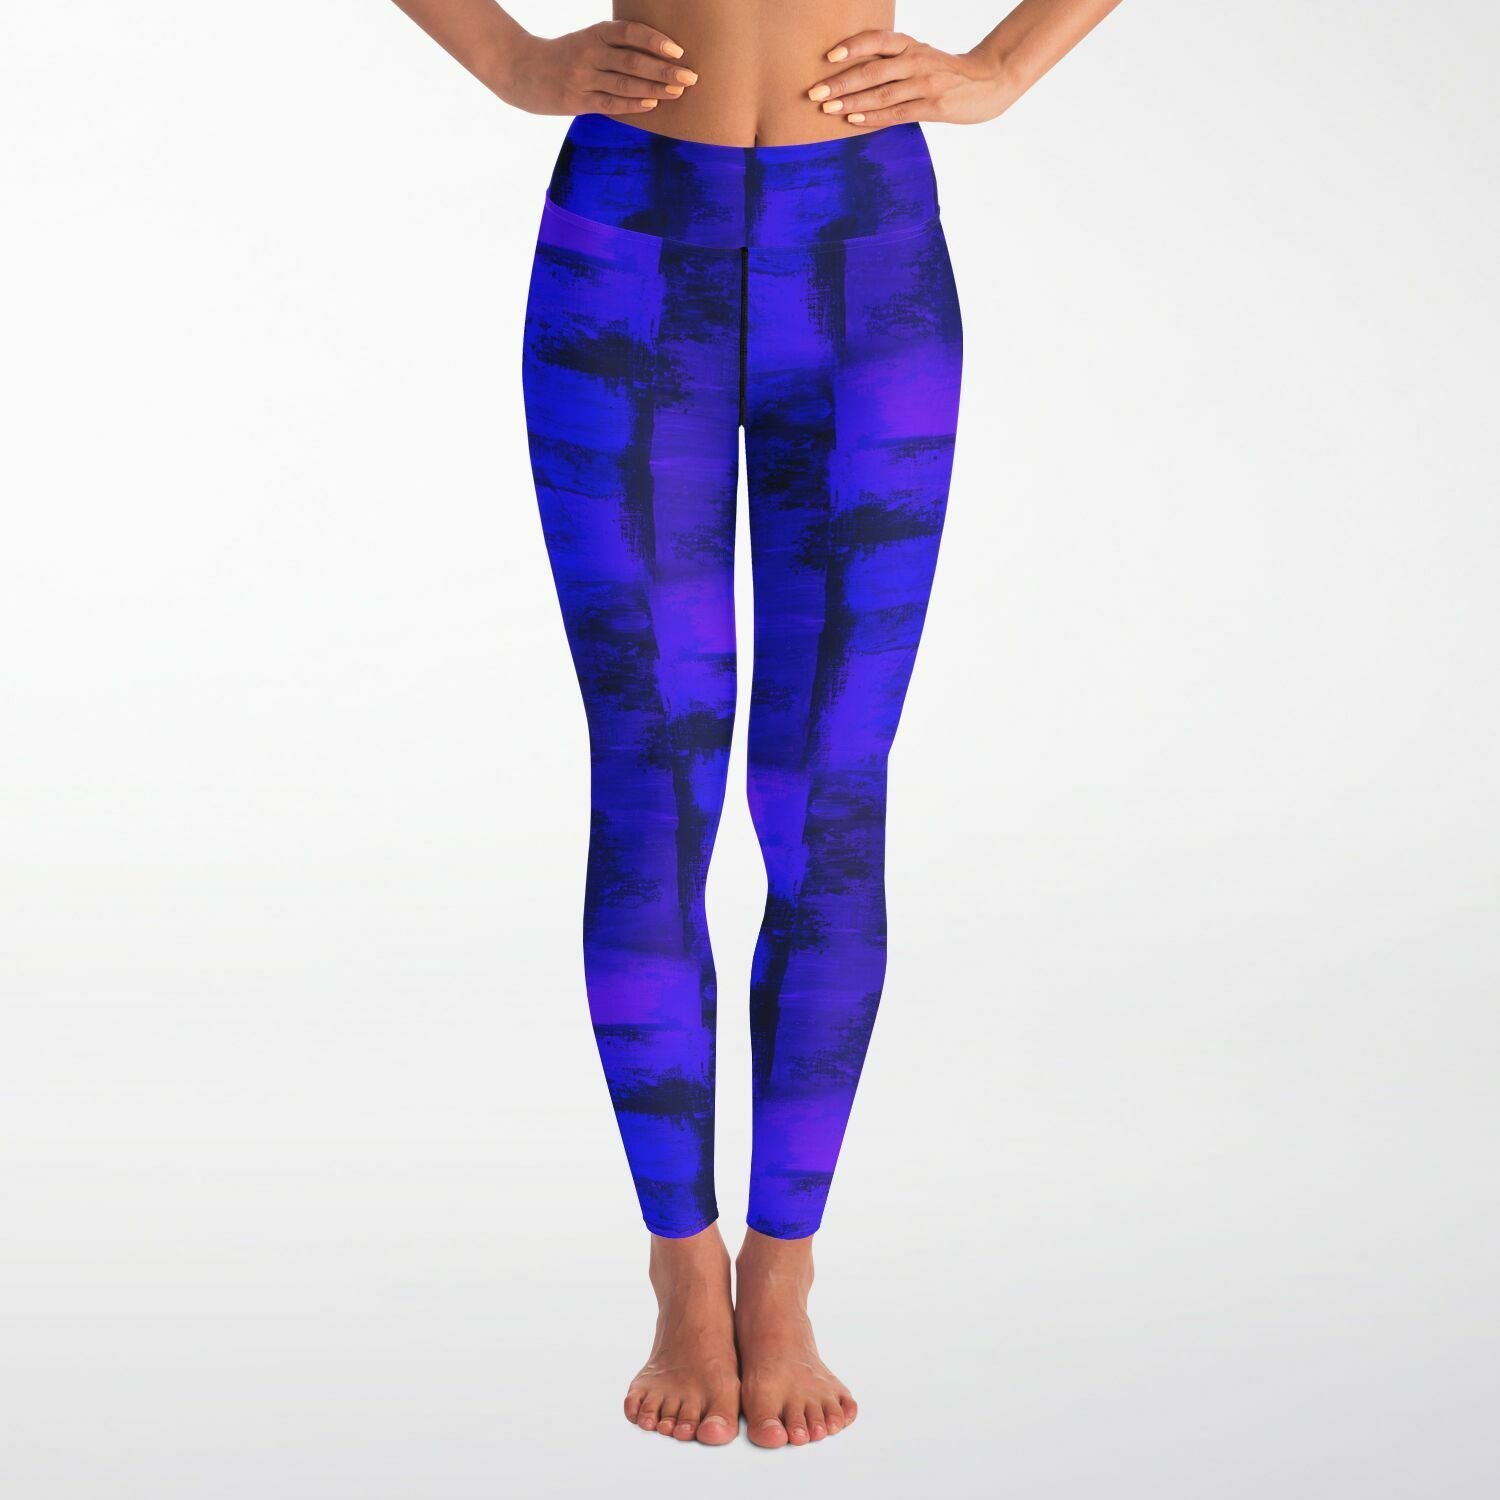 Artistic Yoga Leggings (Violet Blue)